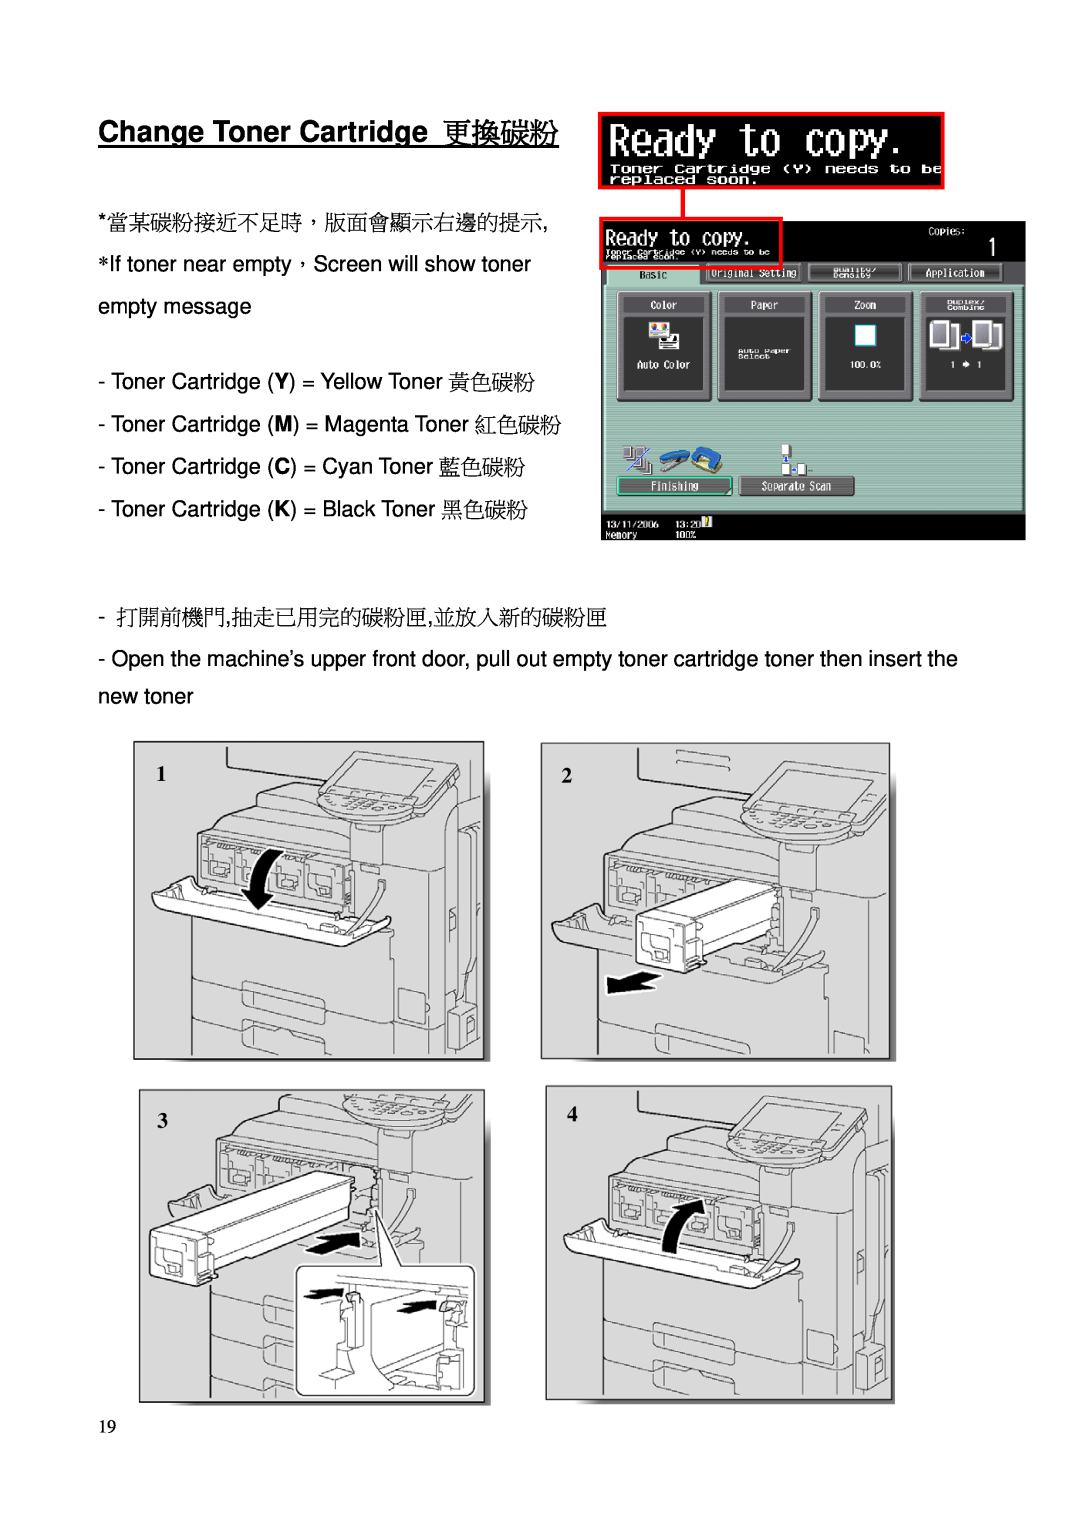 Konica Minolta C452, C552 manual Change Toner Cartridge 更換碳粉, 當某碳粉接近不足時，版面會顯示右邊的提示, 打開前機門,抽走已用完的碳粉匣,並放入新的碳粉匣 